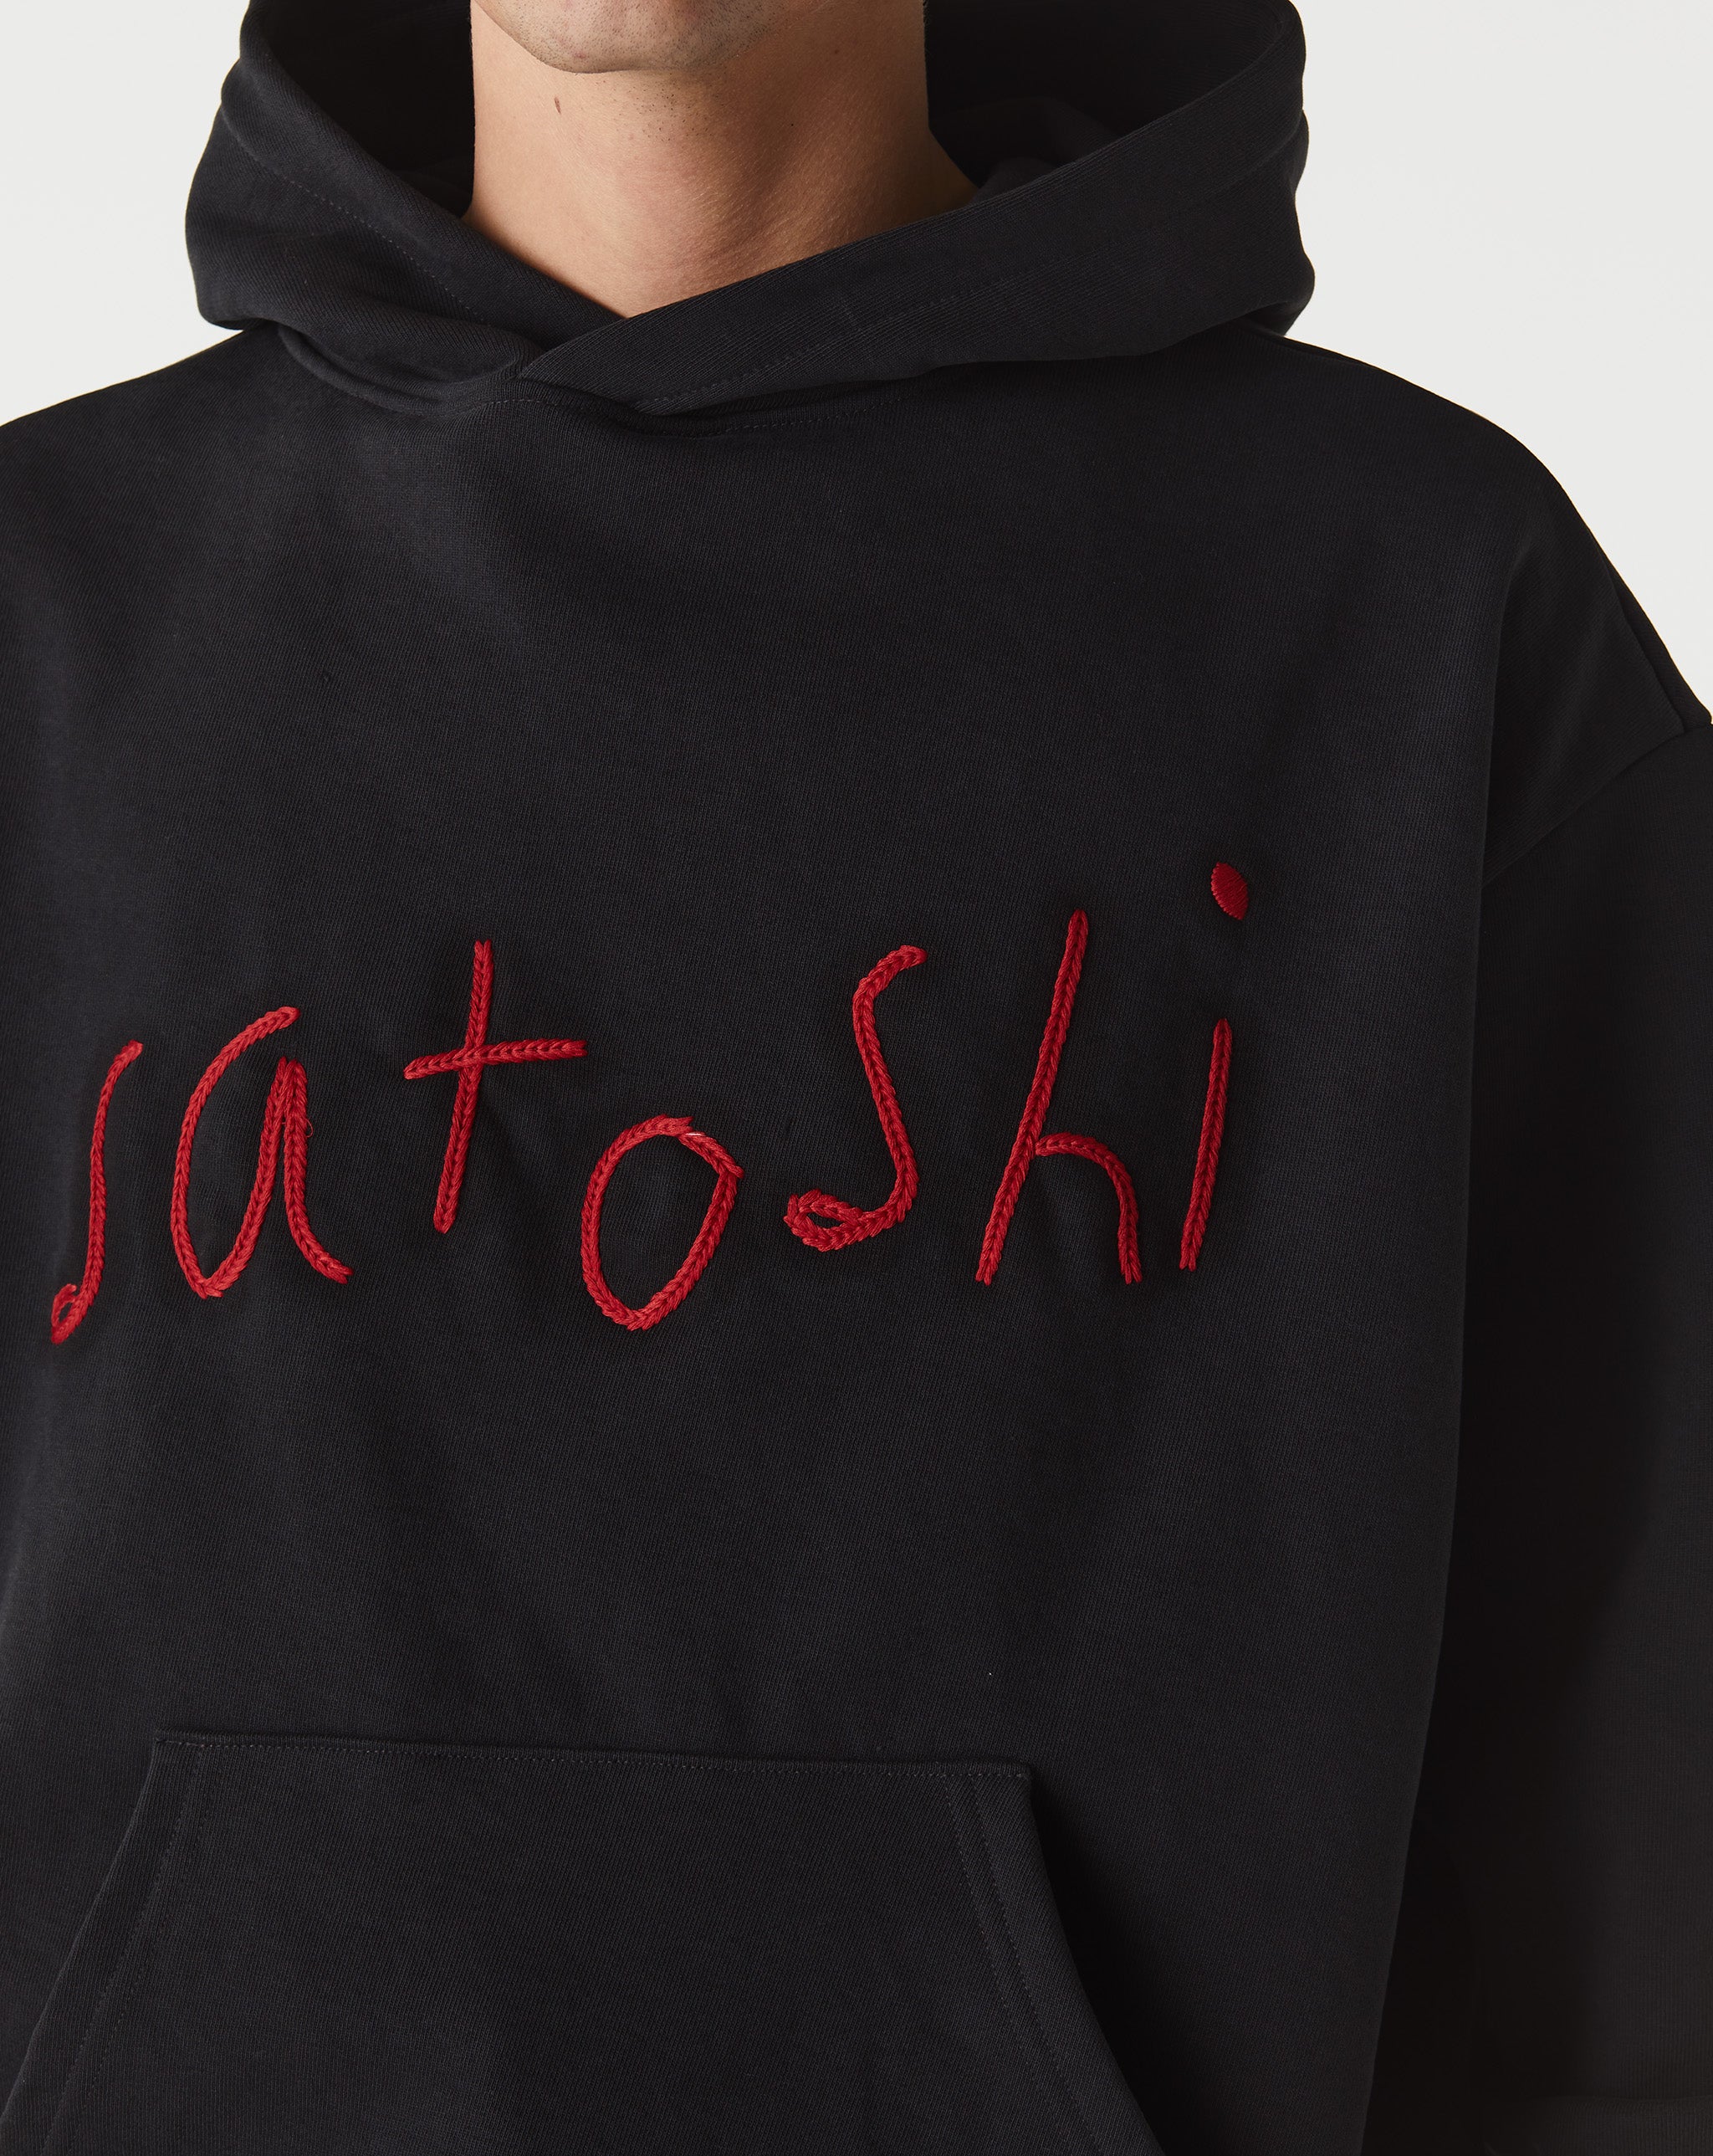 Satoshi Nakamoto Sweaters & Sweatshirts  - Cheap Cerbe Jordan outlet